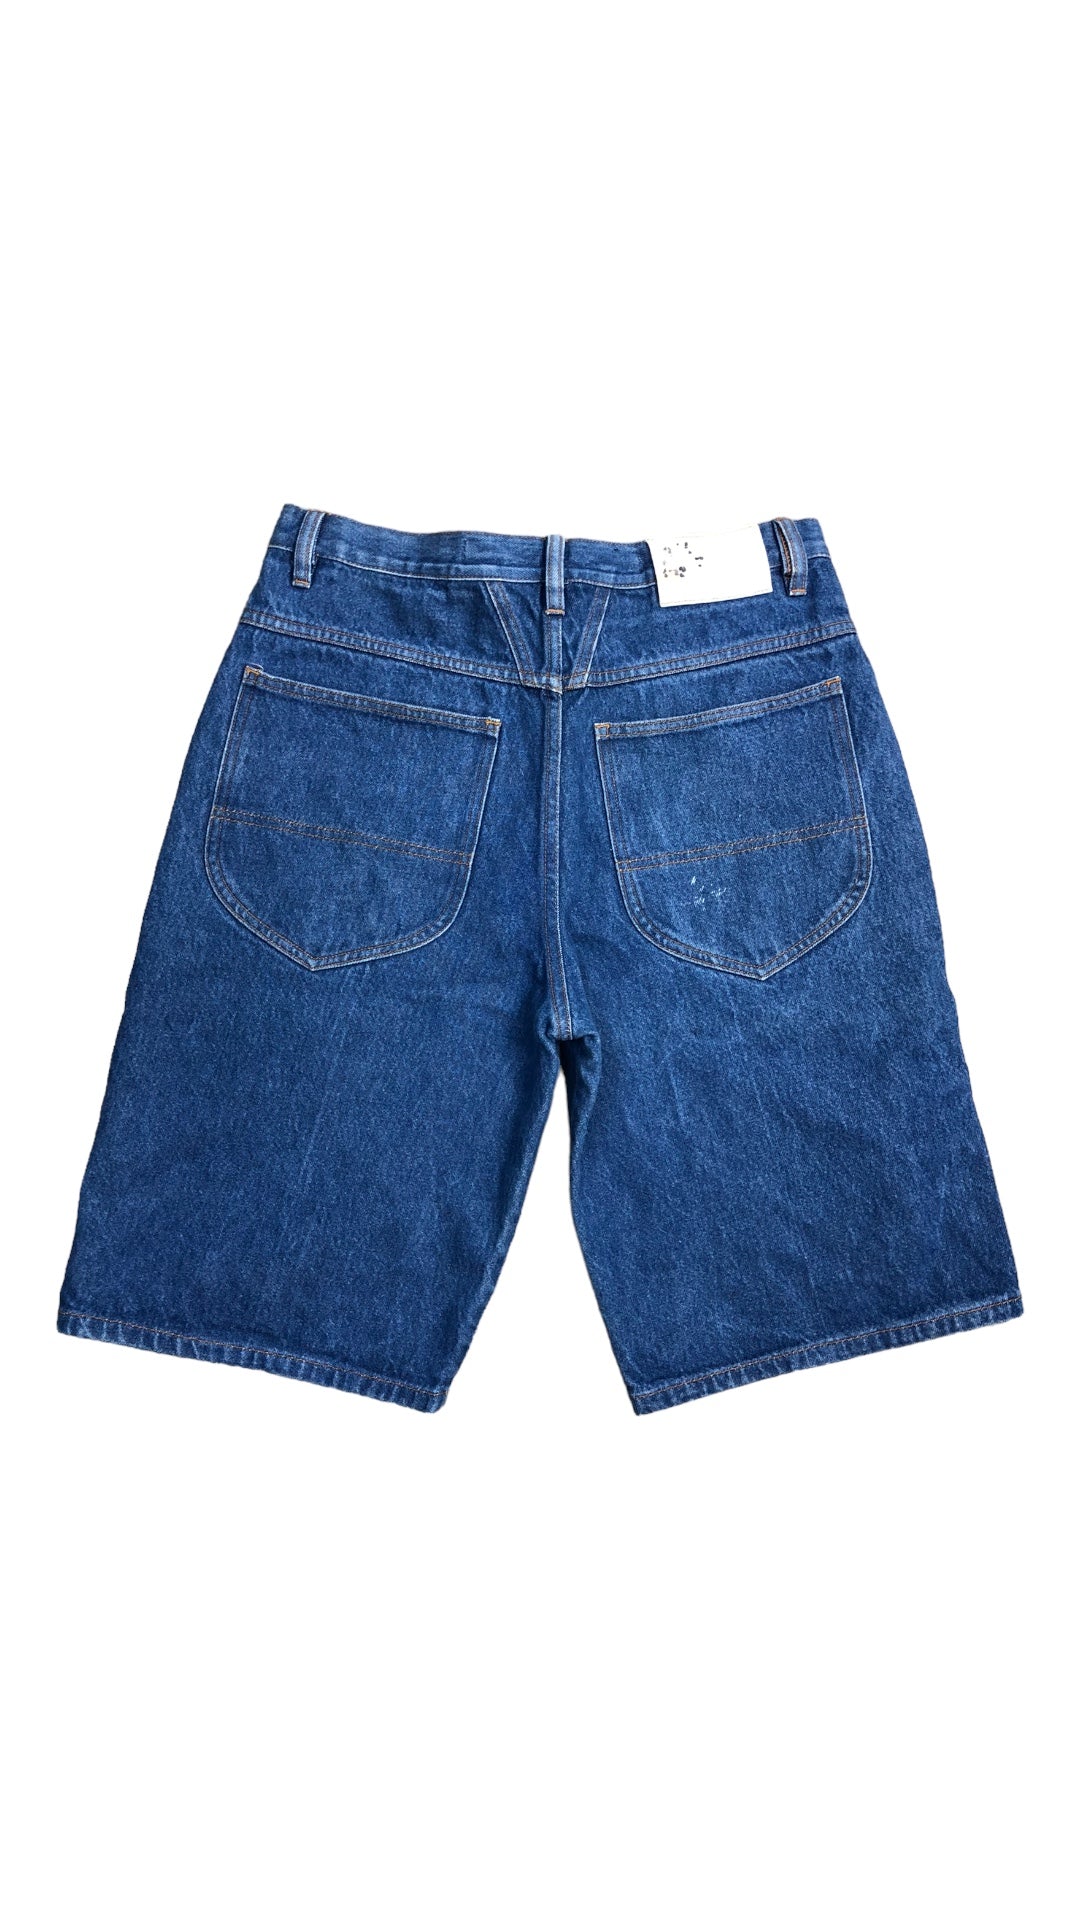 Used Girbaud Blue Denim Shorts Sz 32